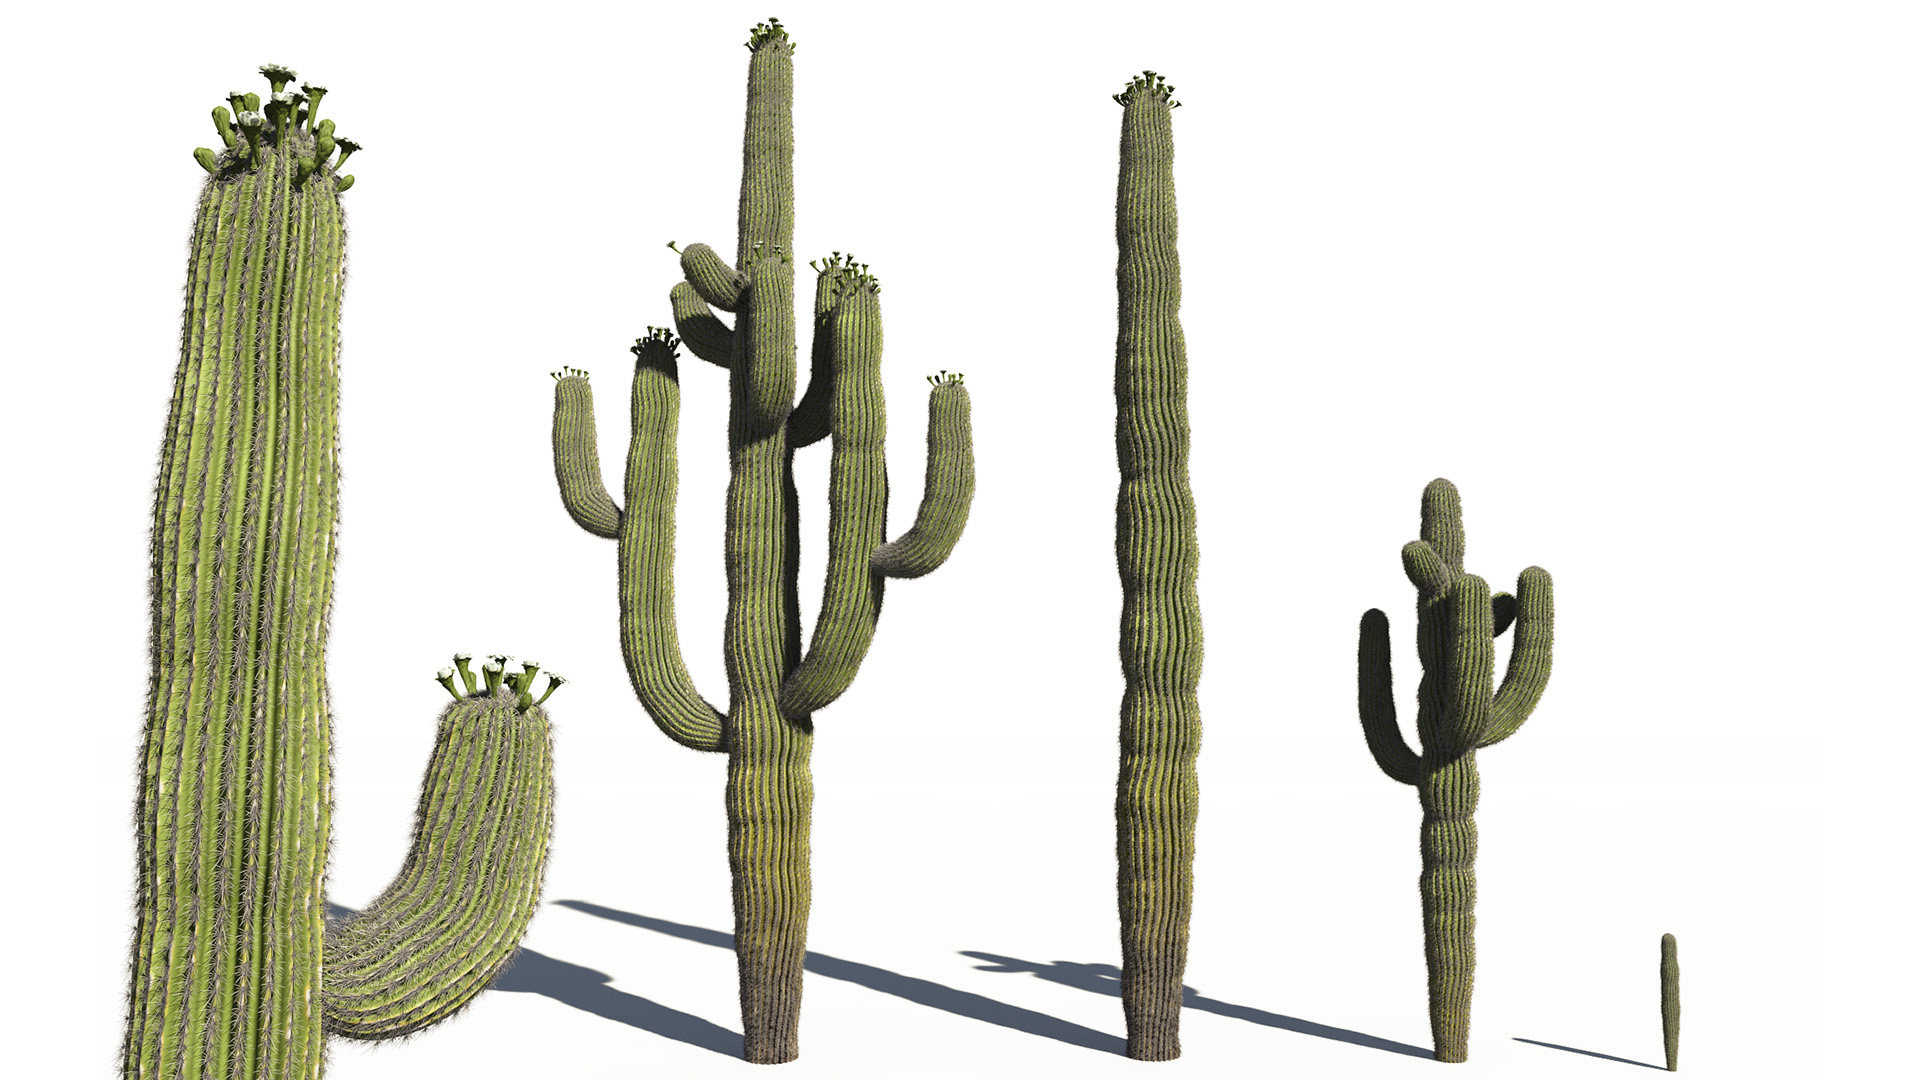 3D model of the Saguaro cactus Carnegiea gigantea